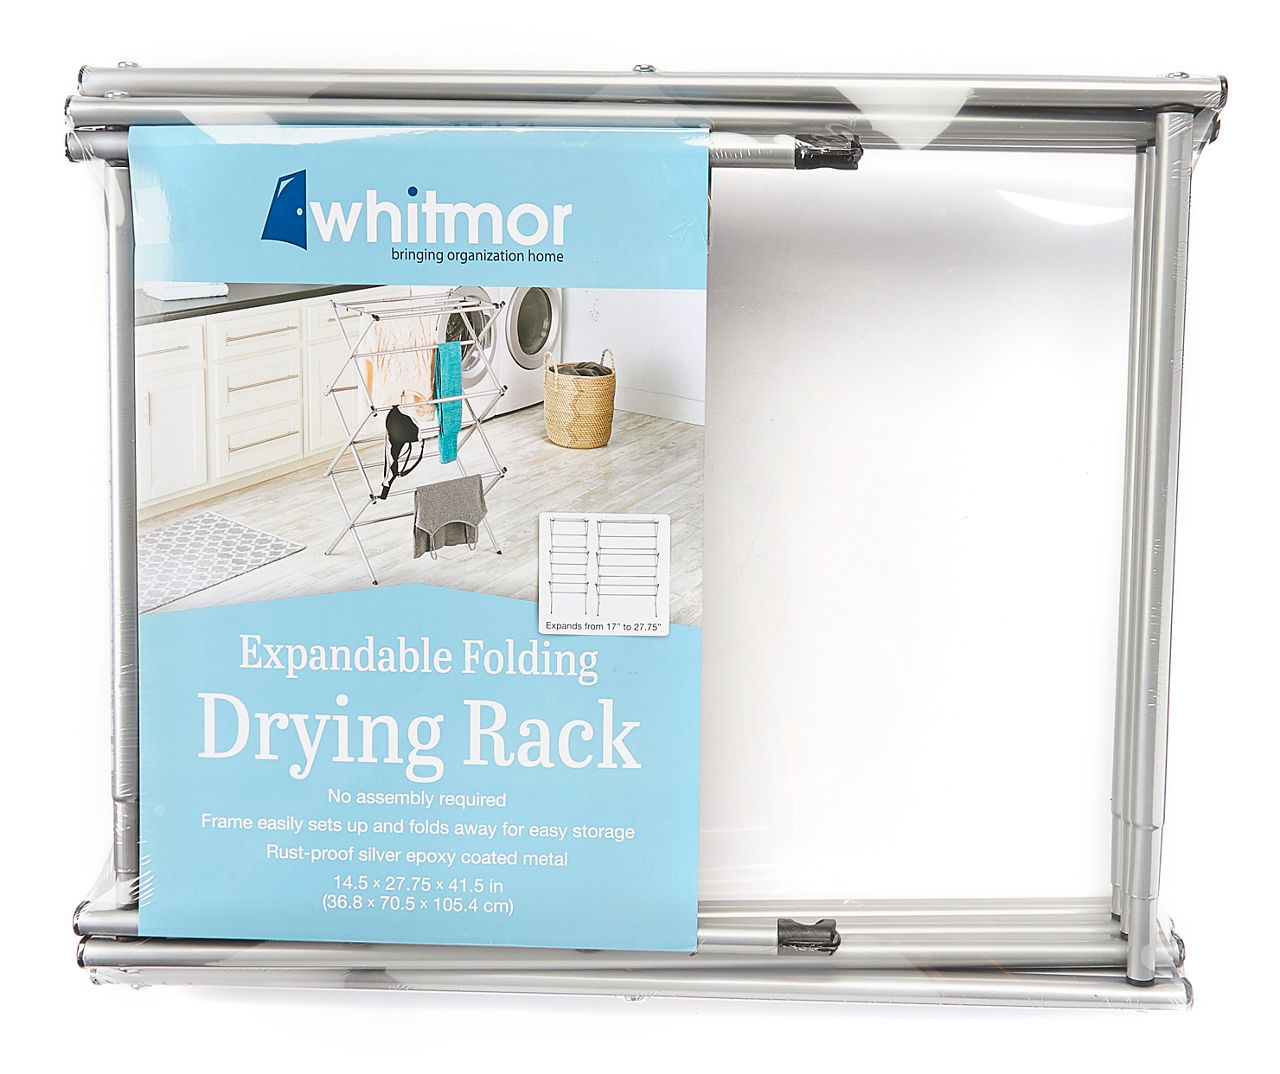 Whitmor - Expandable Folding Drying Rack